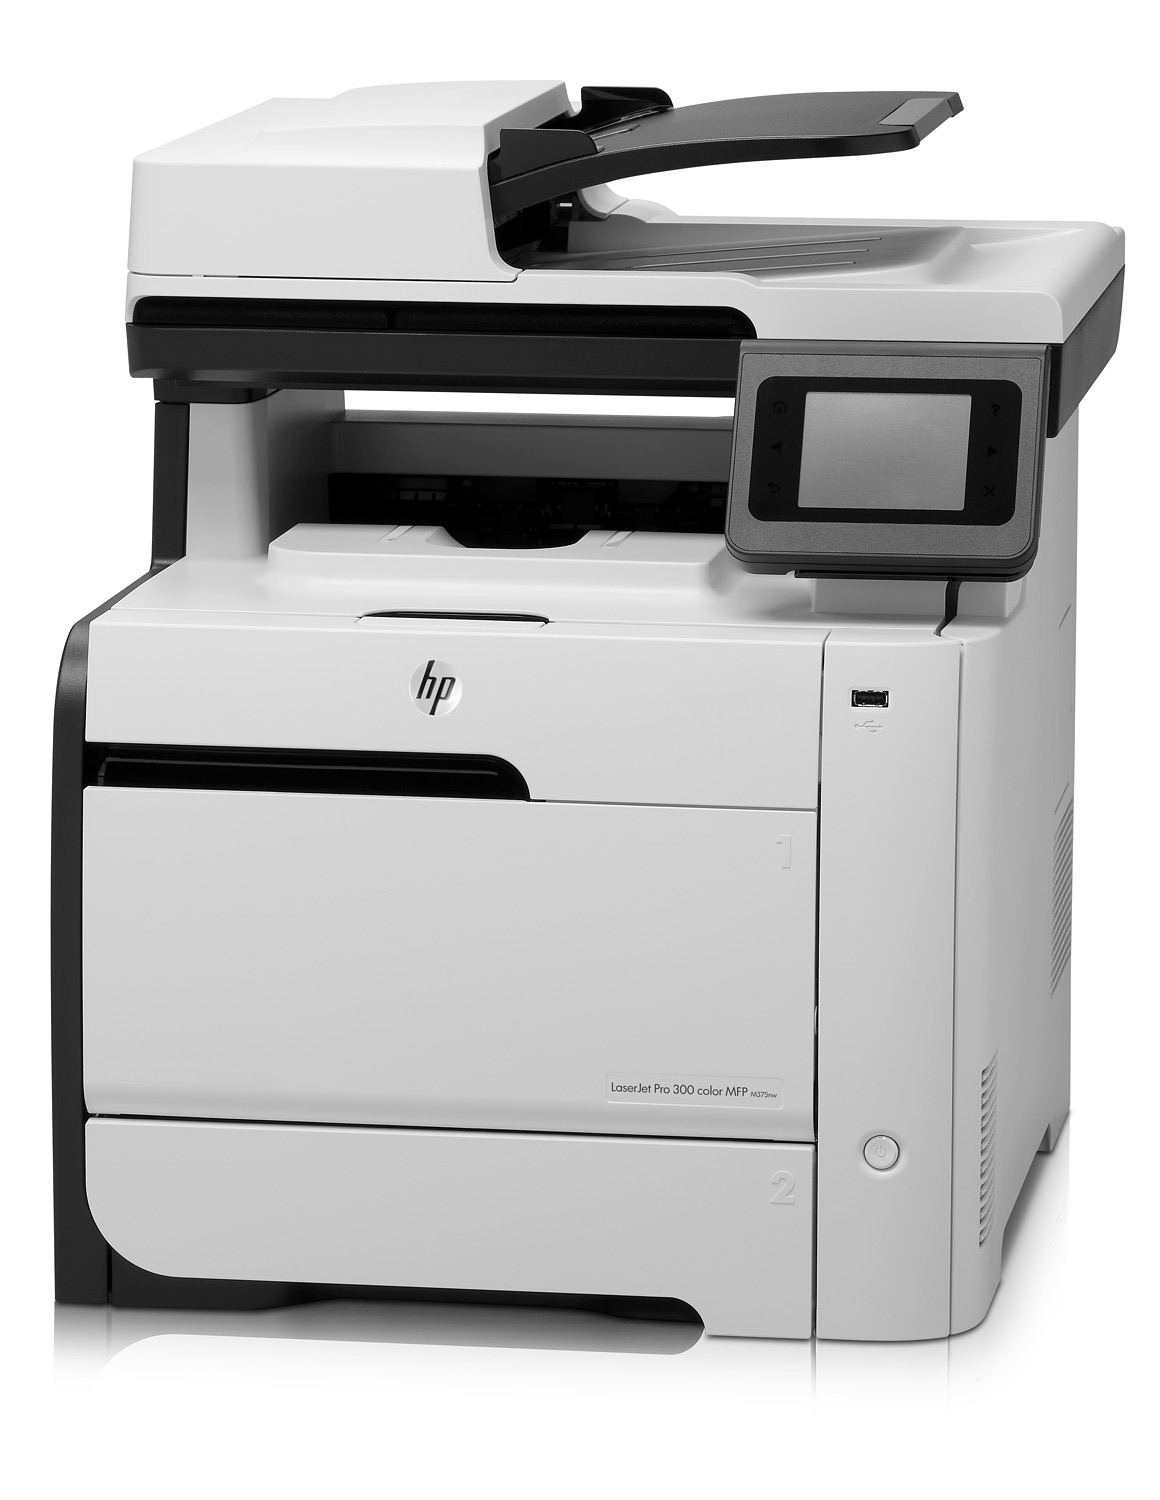 HP LaserJet Pro 300 color M375nw